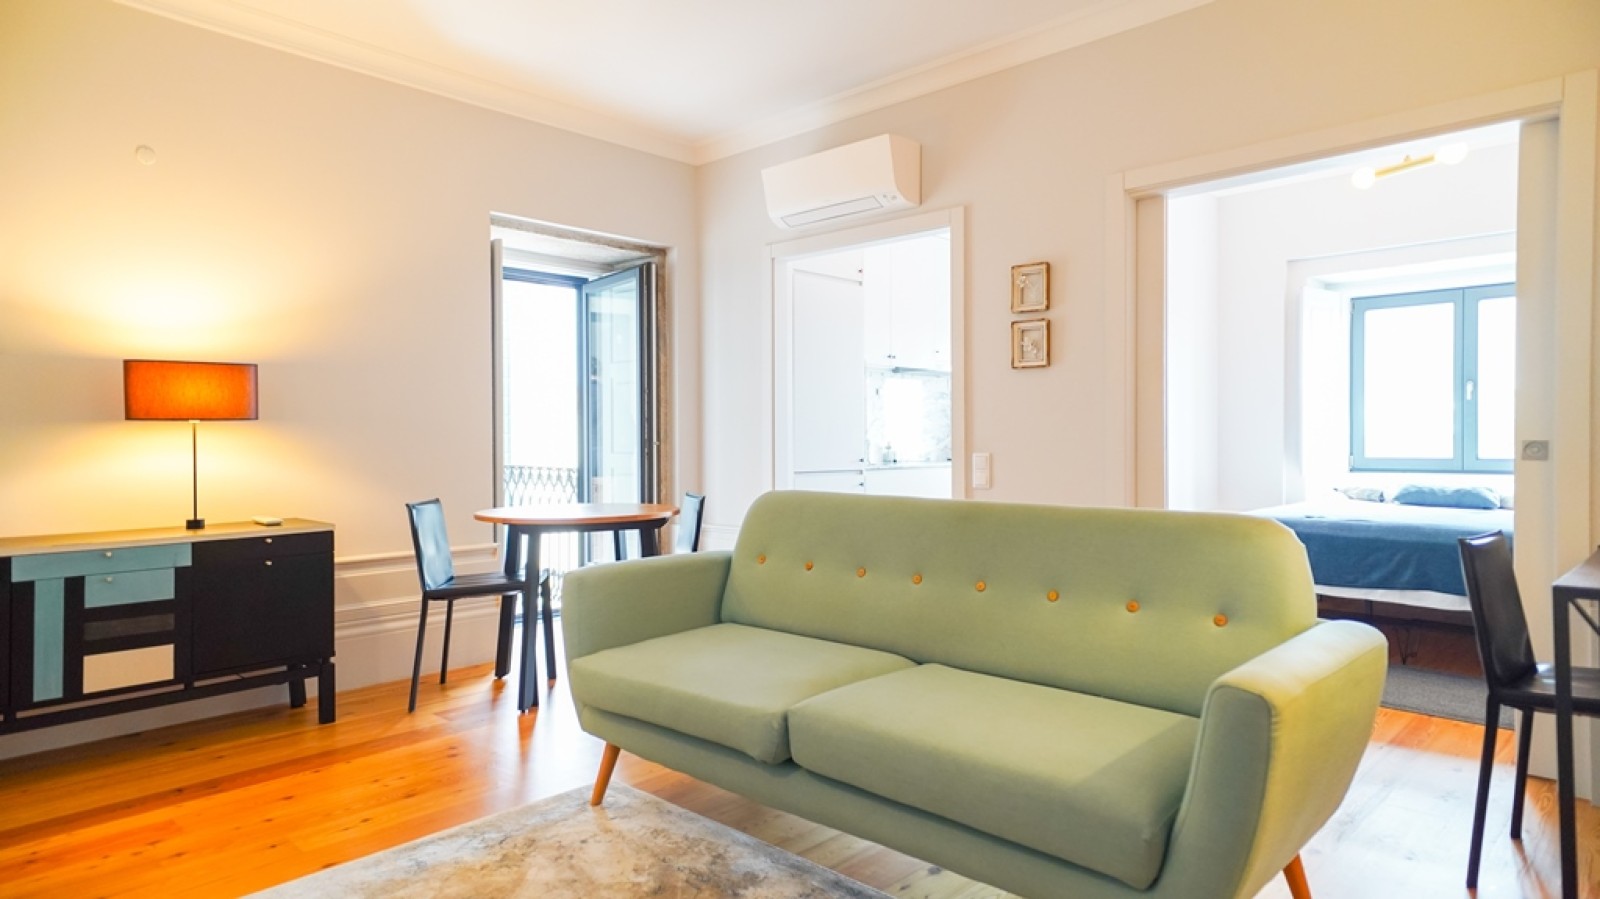 Appartement de 1 chambre avec balcon, à vendre, centre de Porto, Portugal_263808